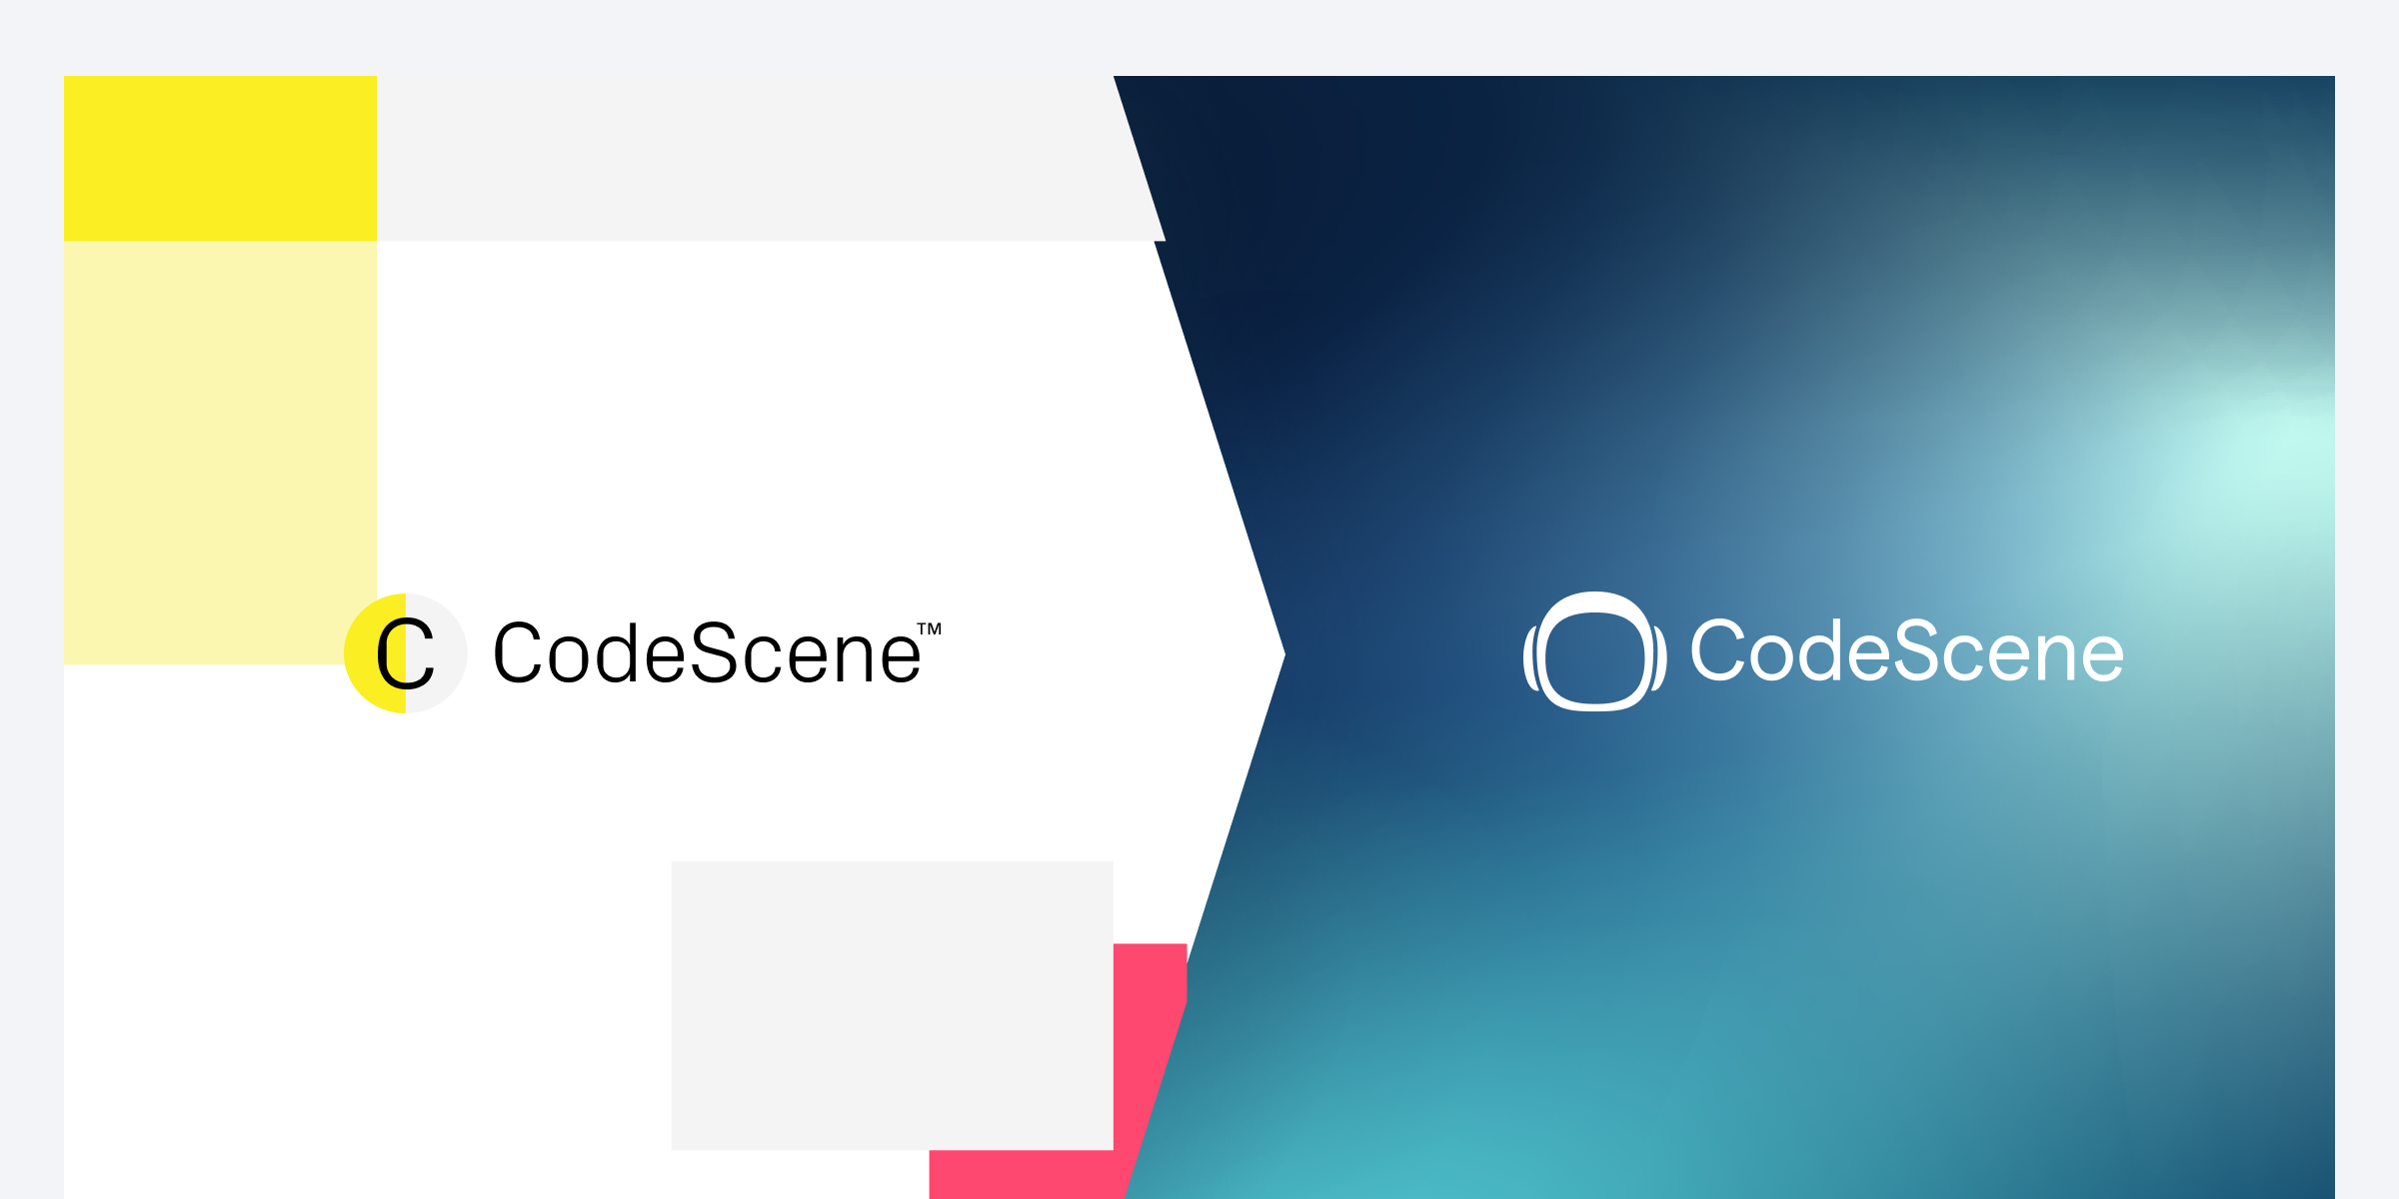 CodeScene just got a new look.